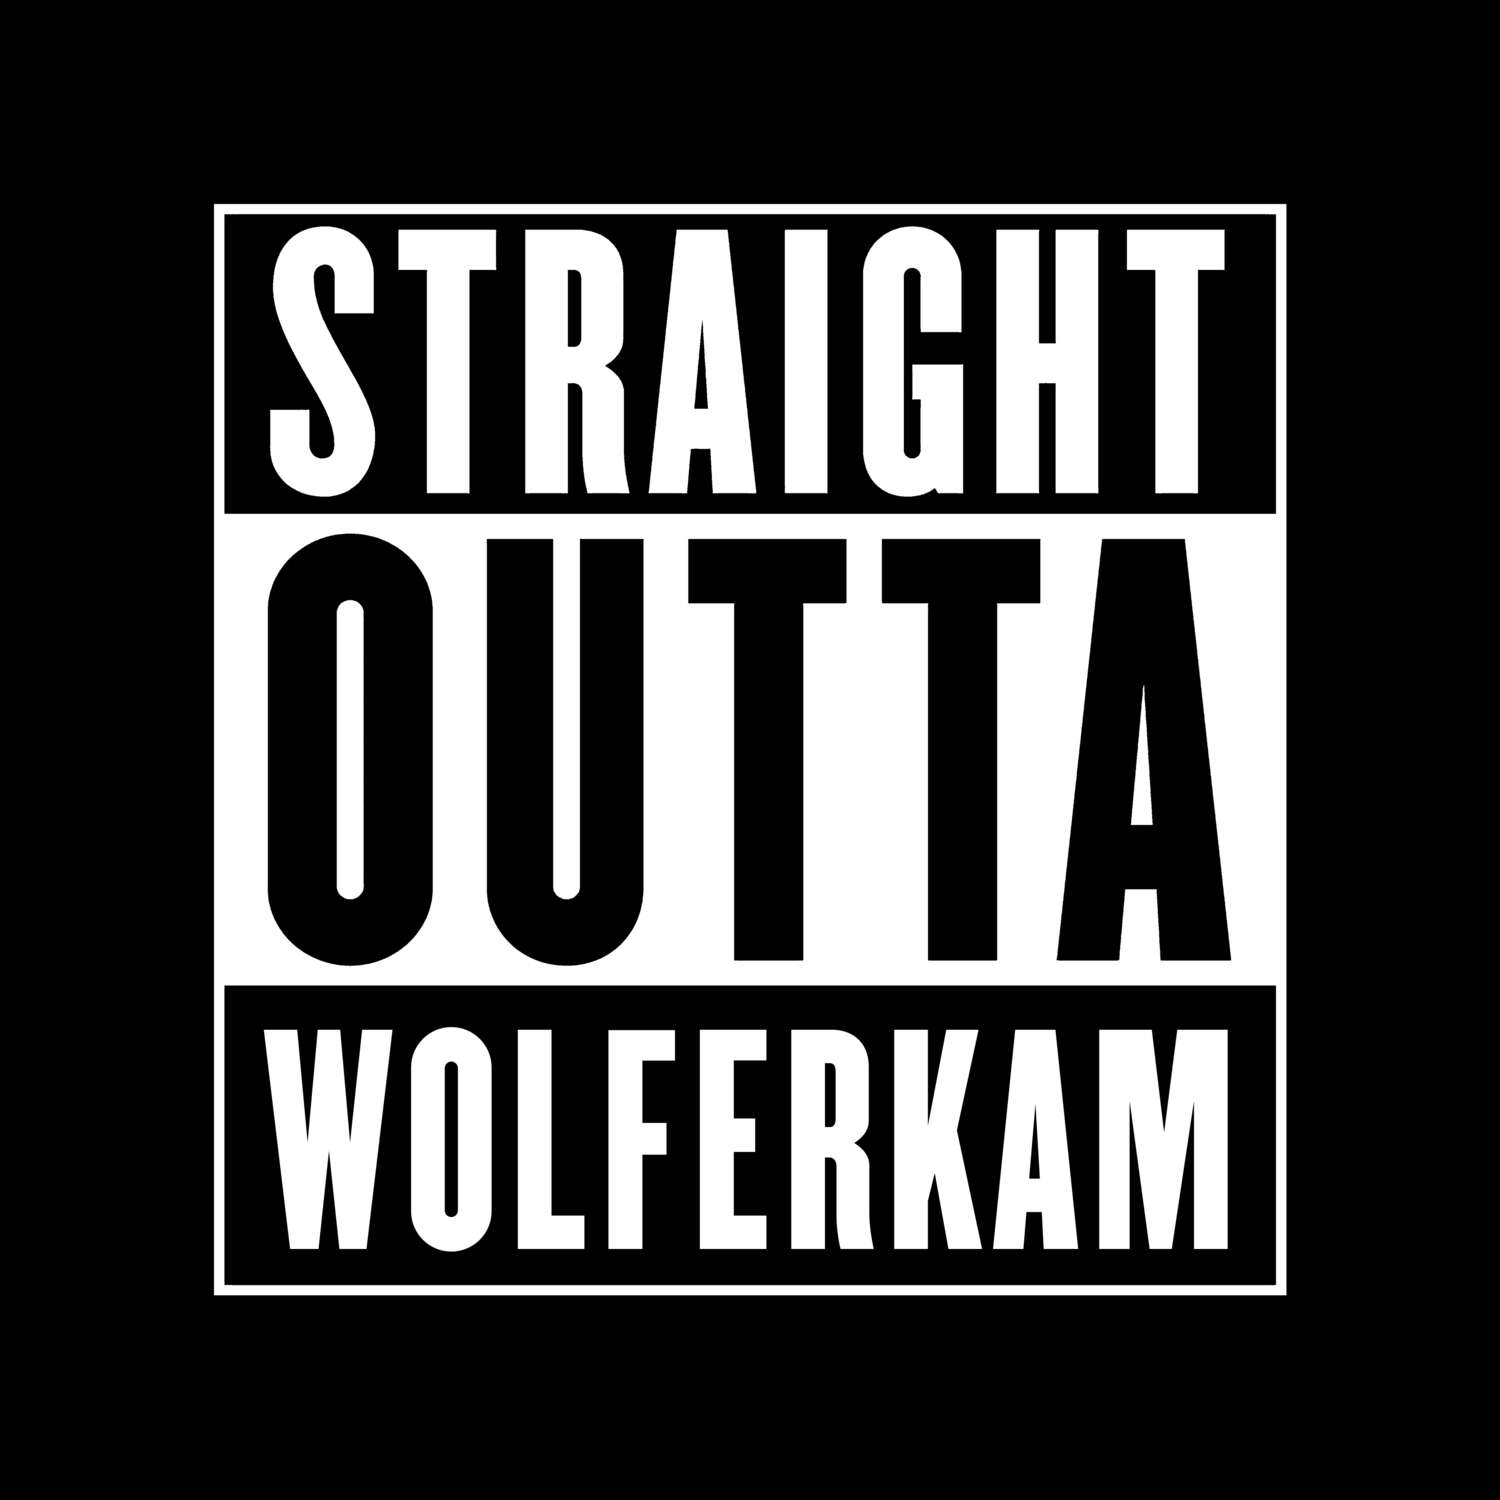 Wolferkam T-Shirt »Straight Outta«